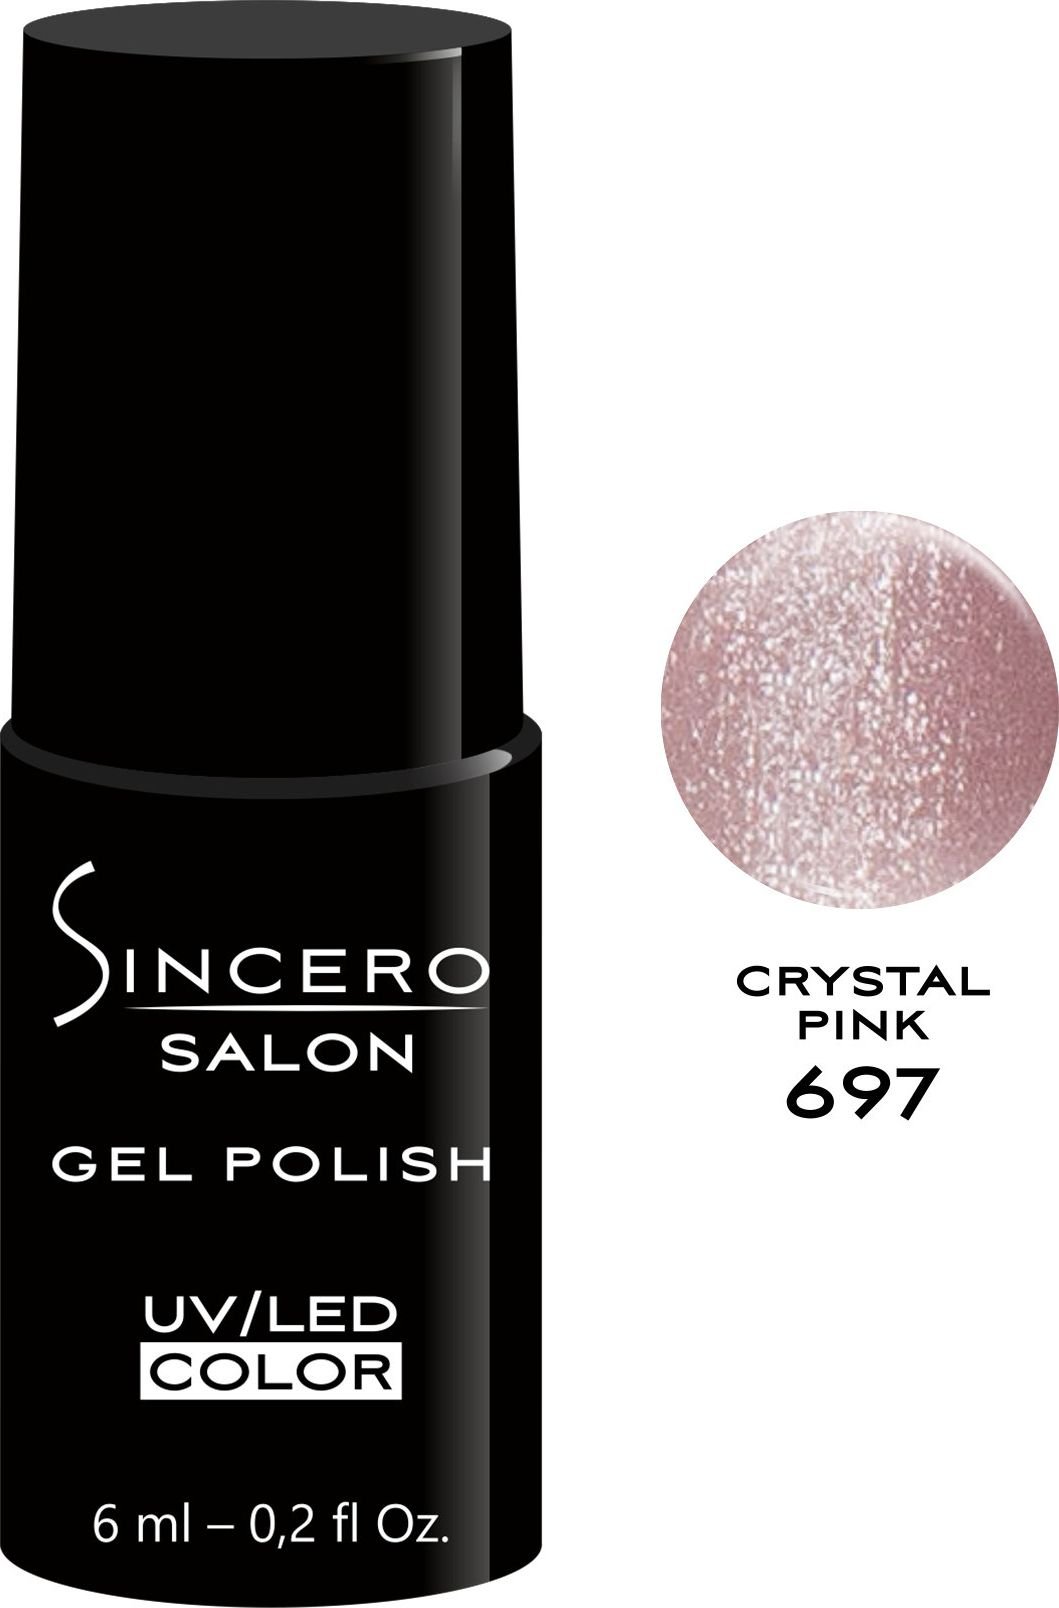 Sincero Salon Gel Polish UV/LED 697 Crystal Pink 6ml